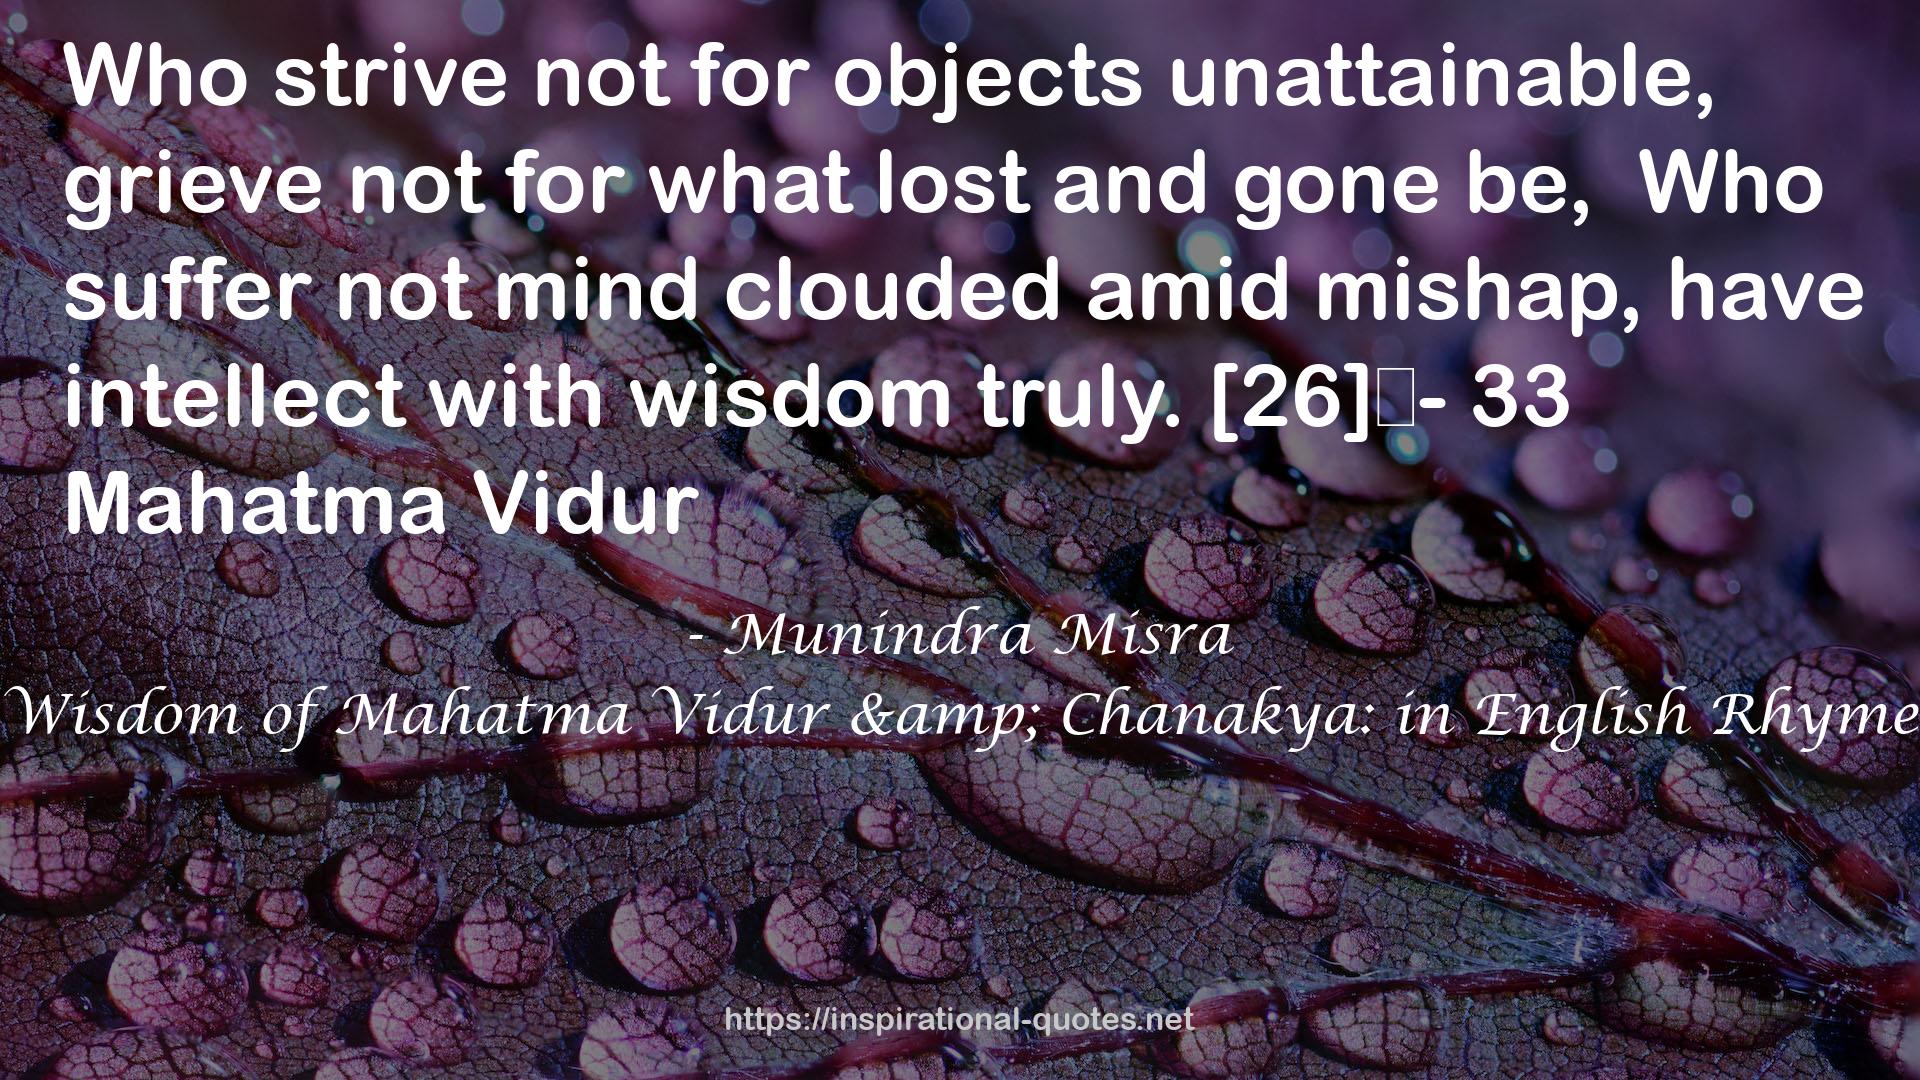 Wisdom of Mahatma Vidur & Chanakya: in English Rhyme QUOTES